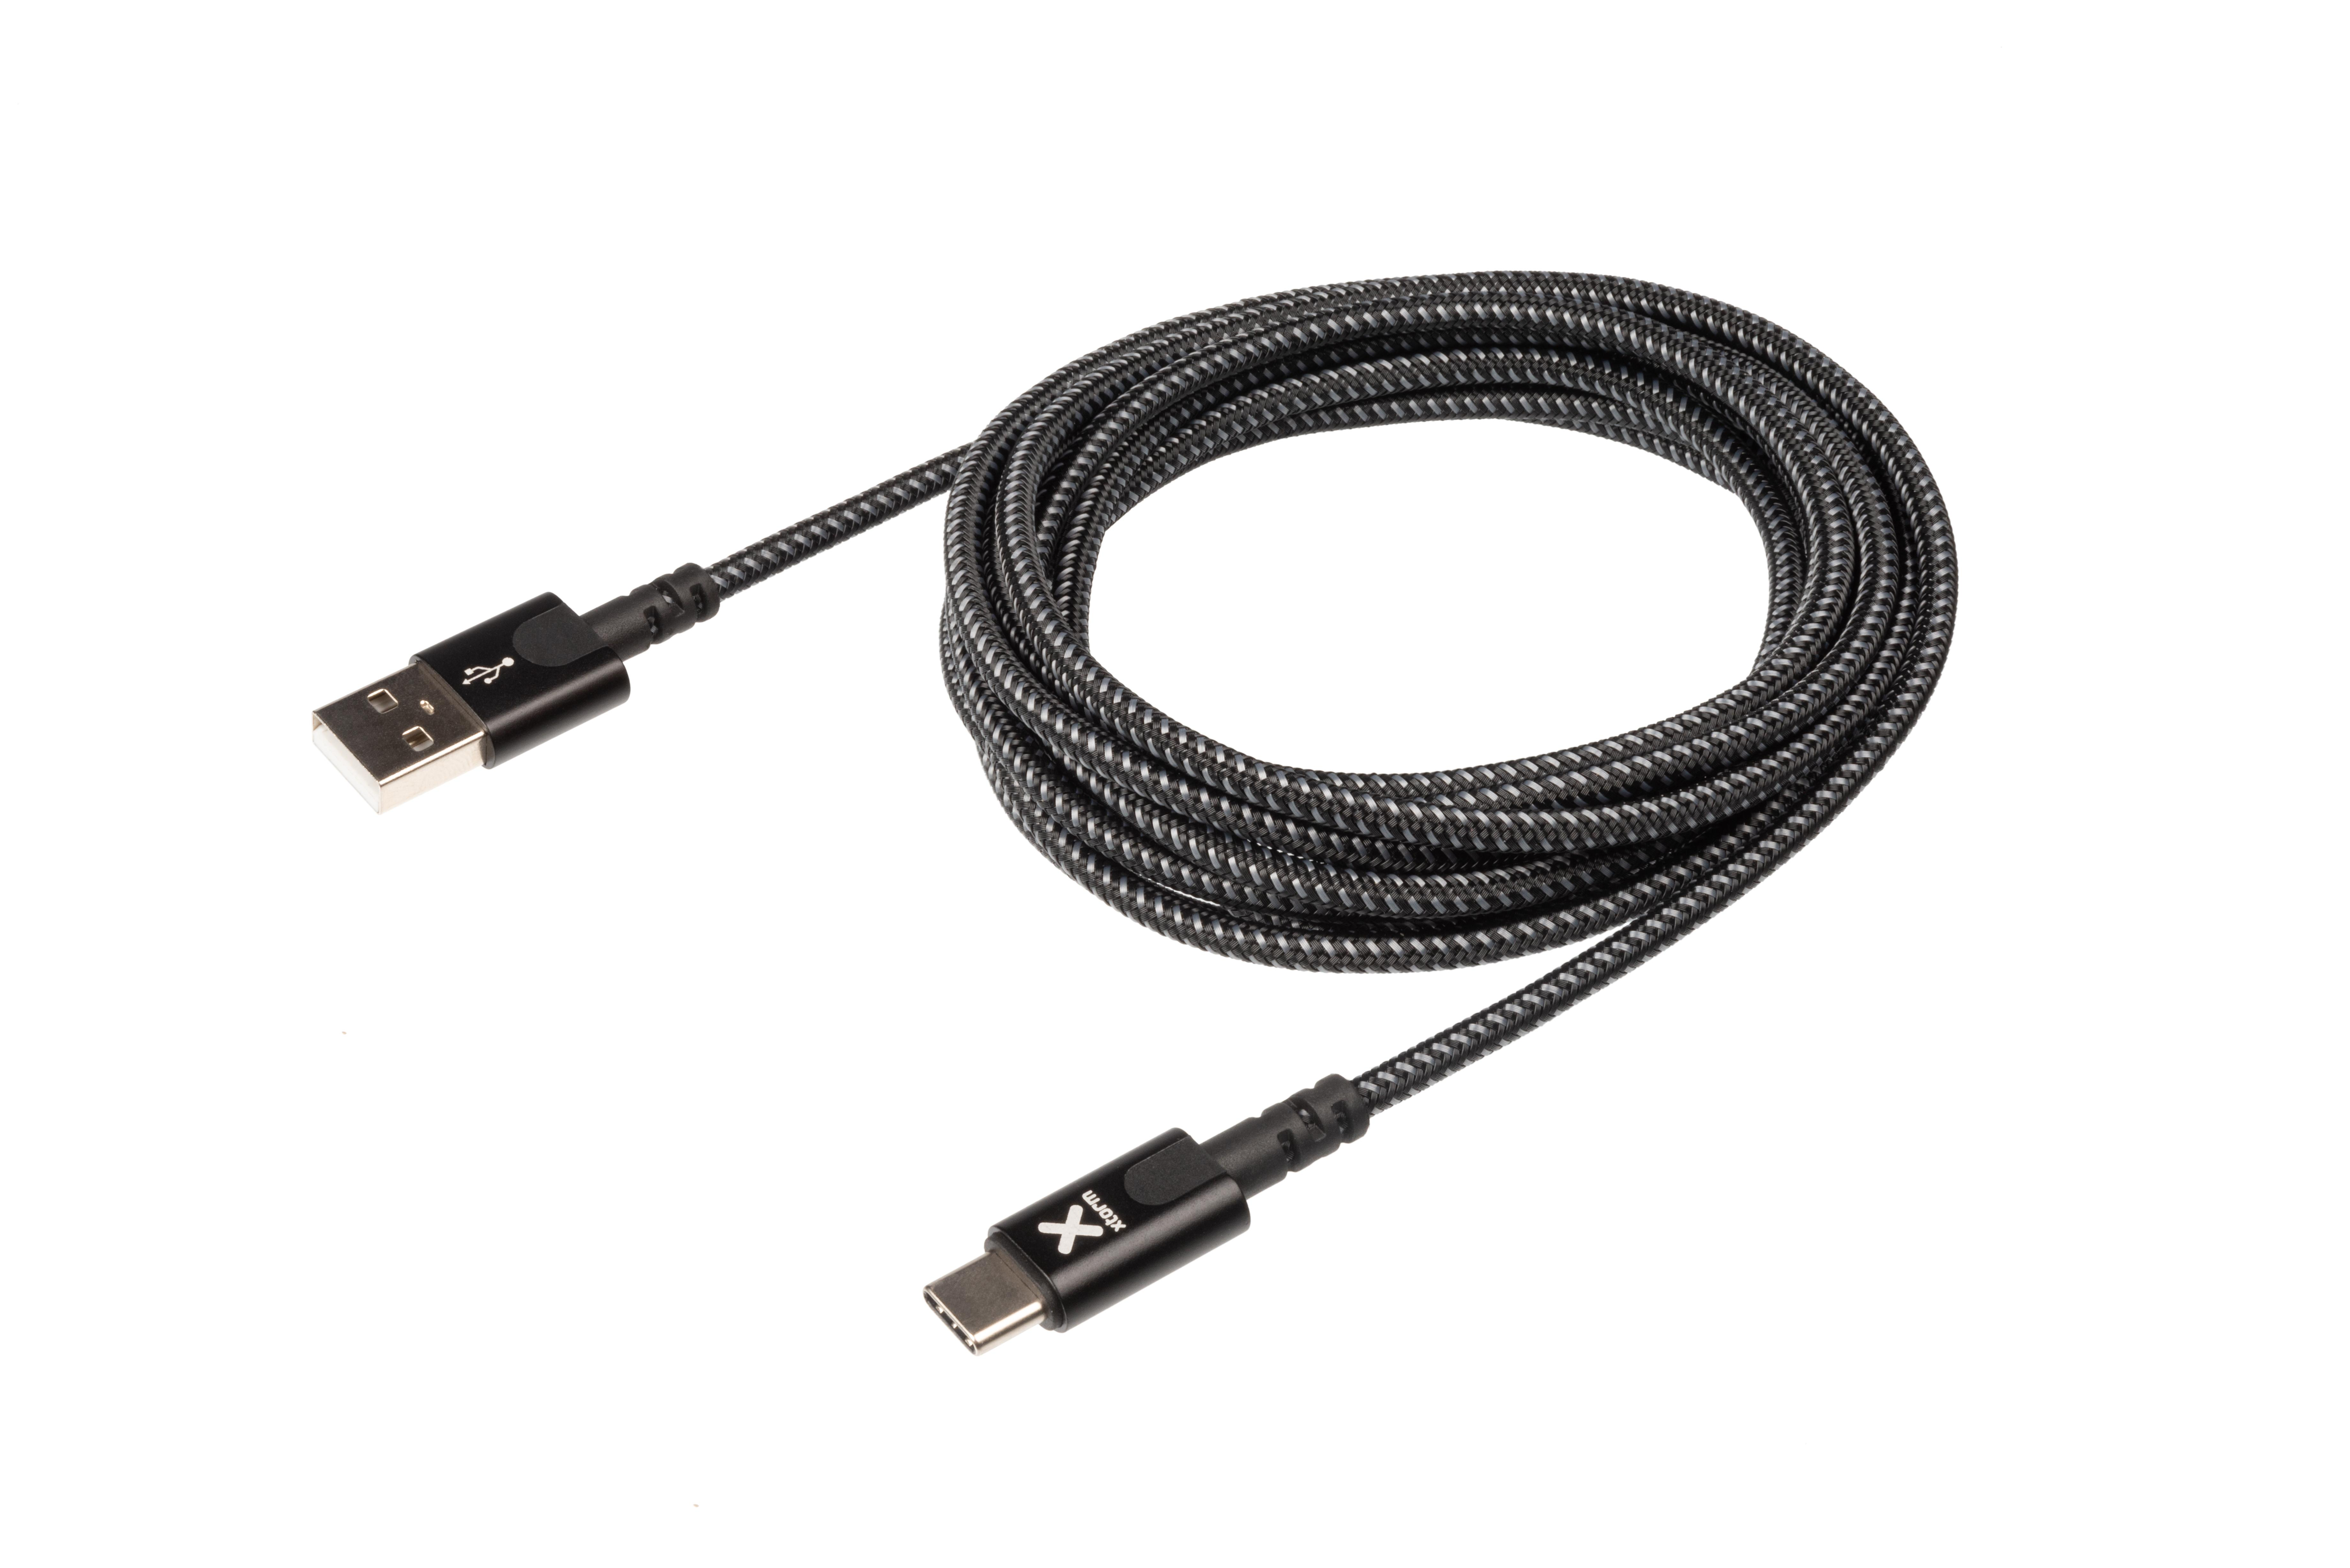 Lightning Schwarz Original Kabel Kabel (1m) USB auf XTORM USB